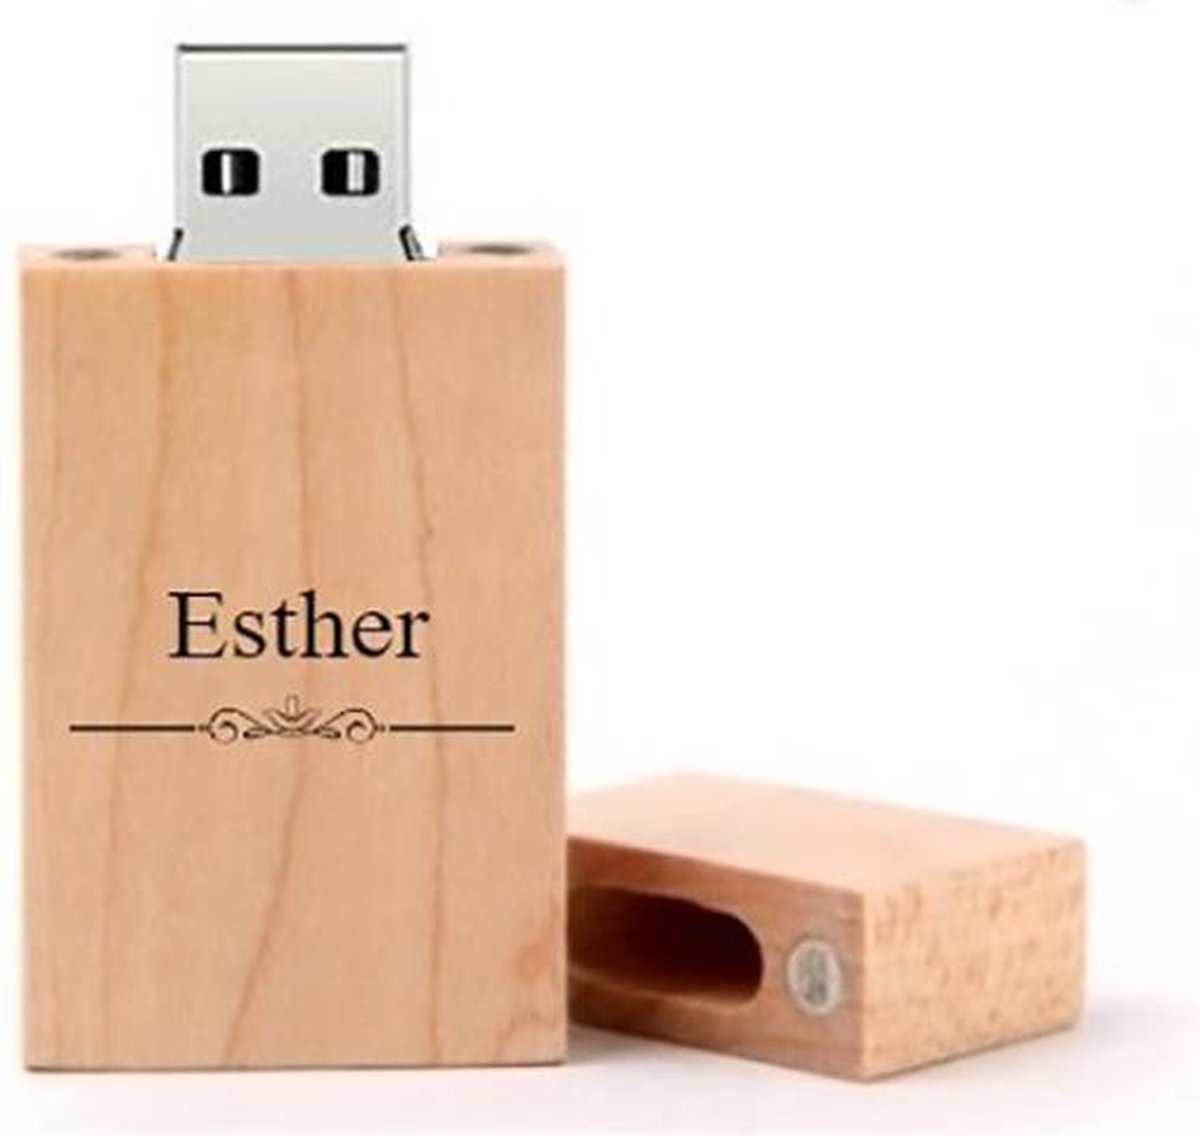 Esther naam kado verjaardagscadeau cadeau usb stick 32GB